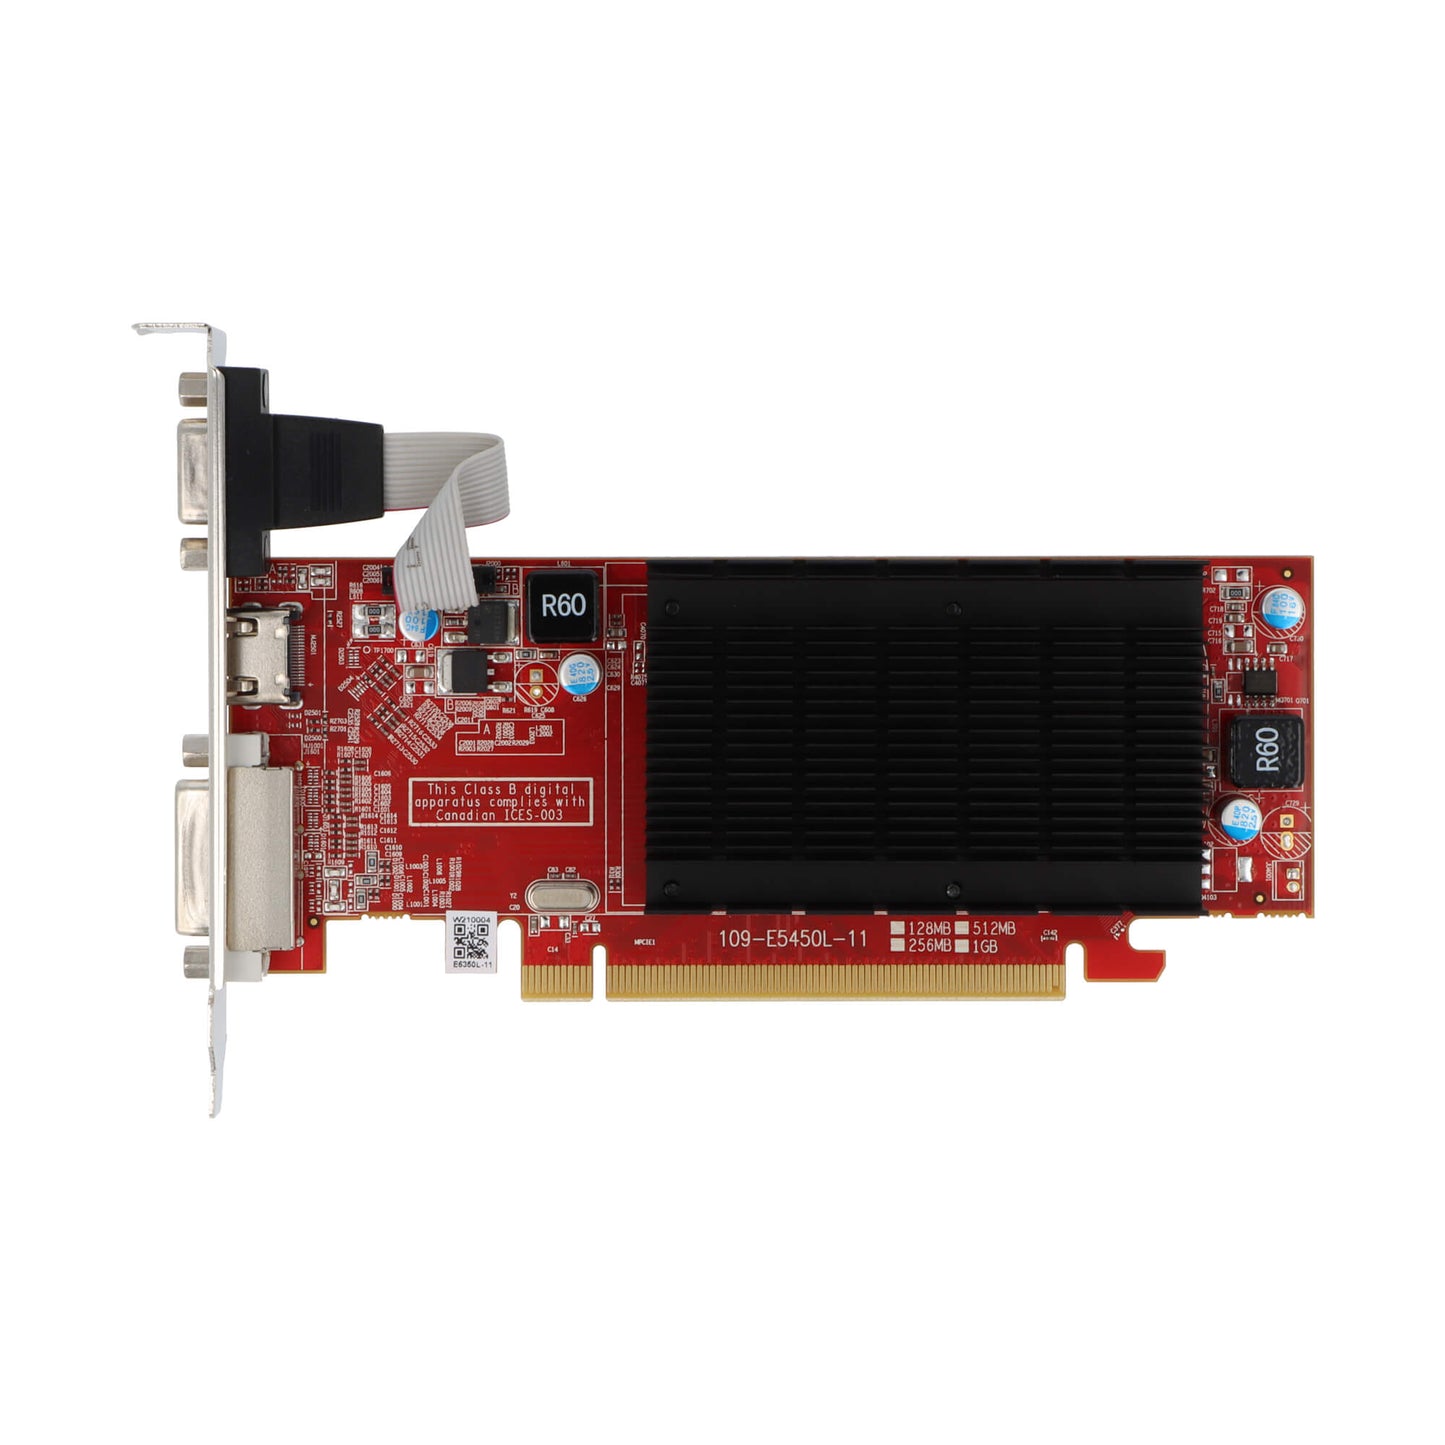 Radeon HD 5450 1GB GDDR3 (DVI-I, HDMI, VGA)